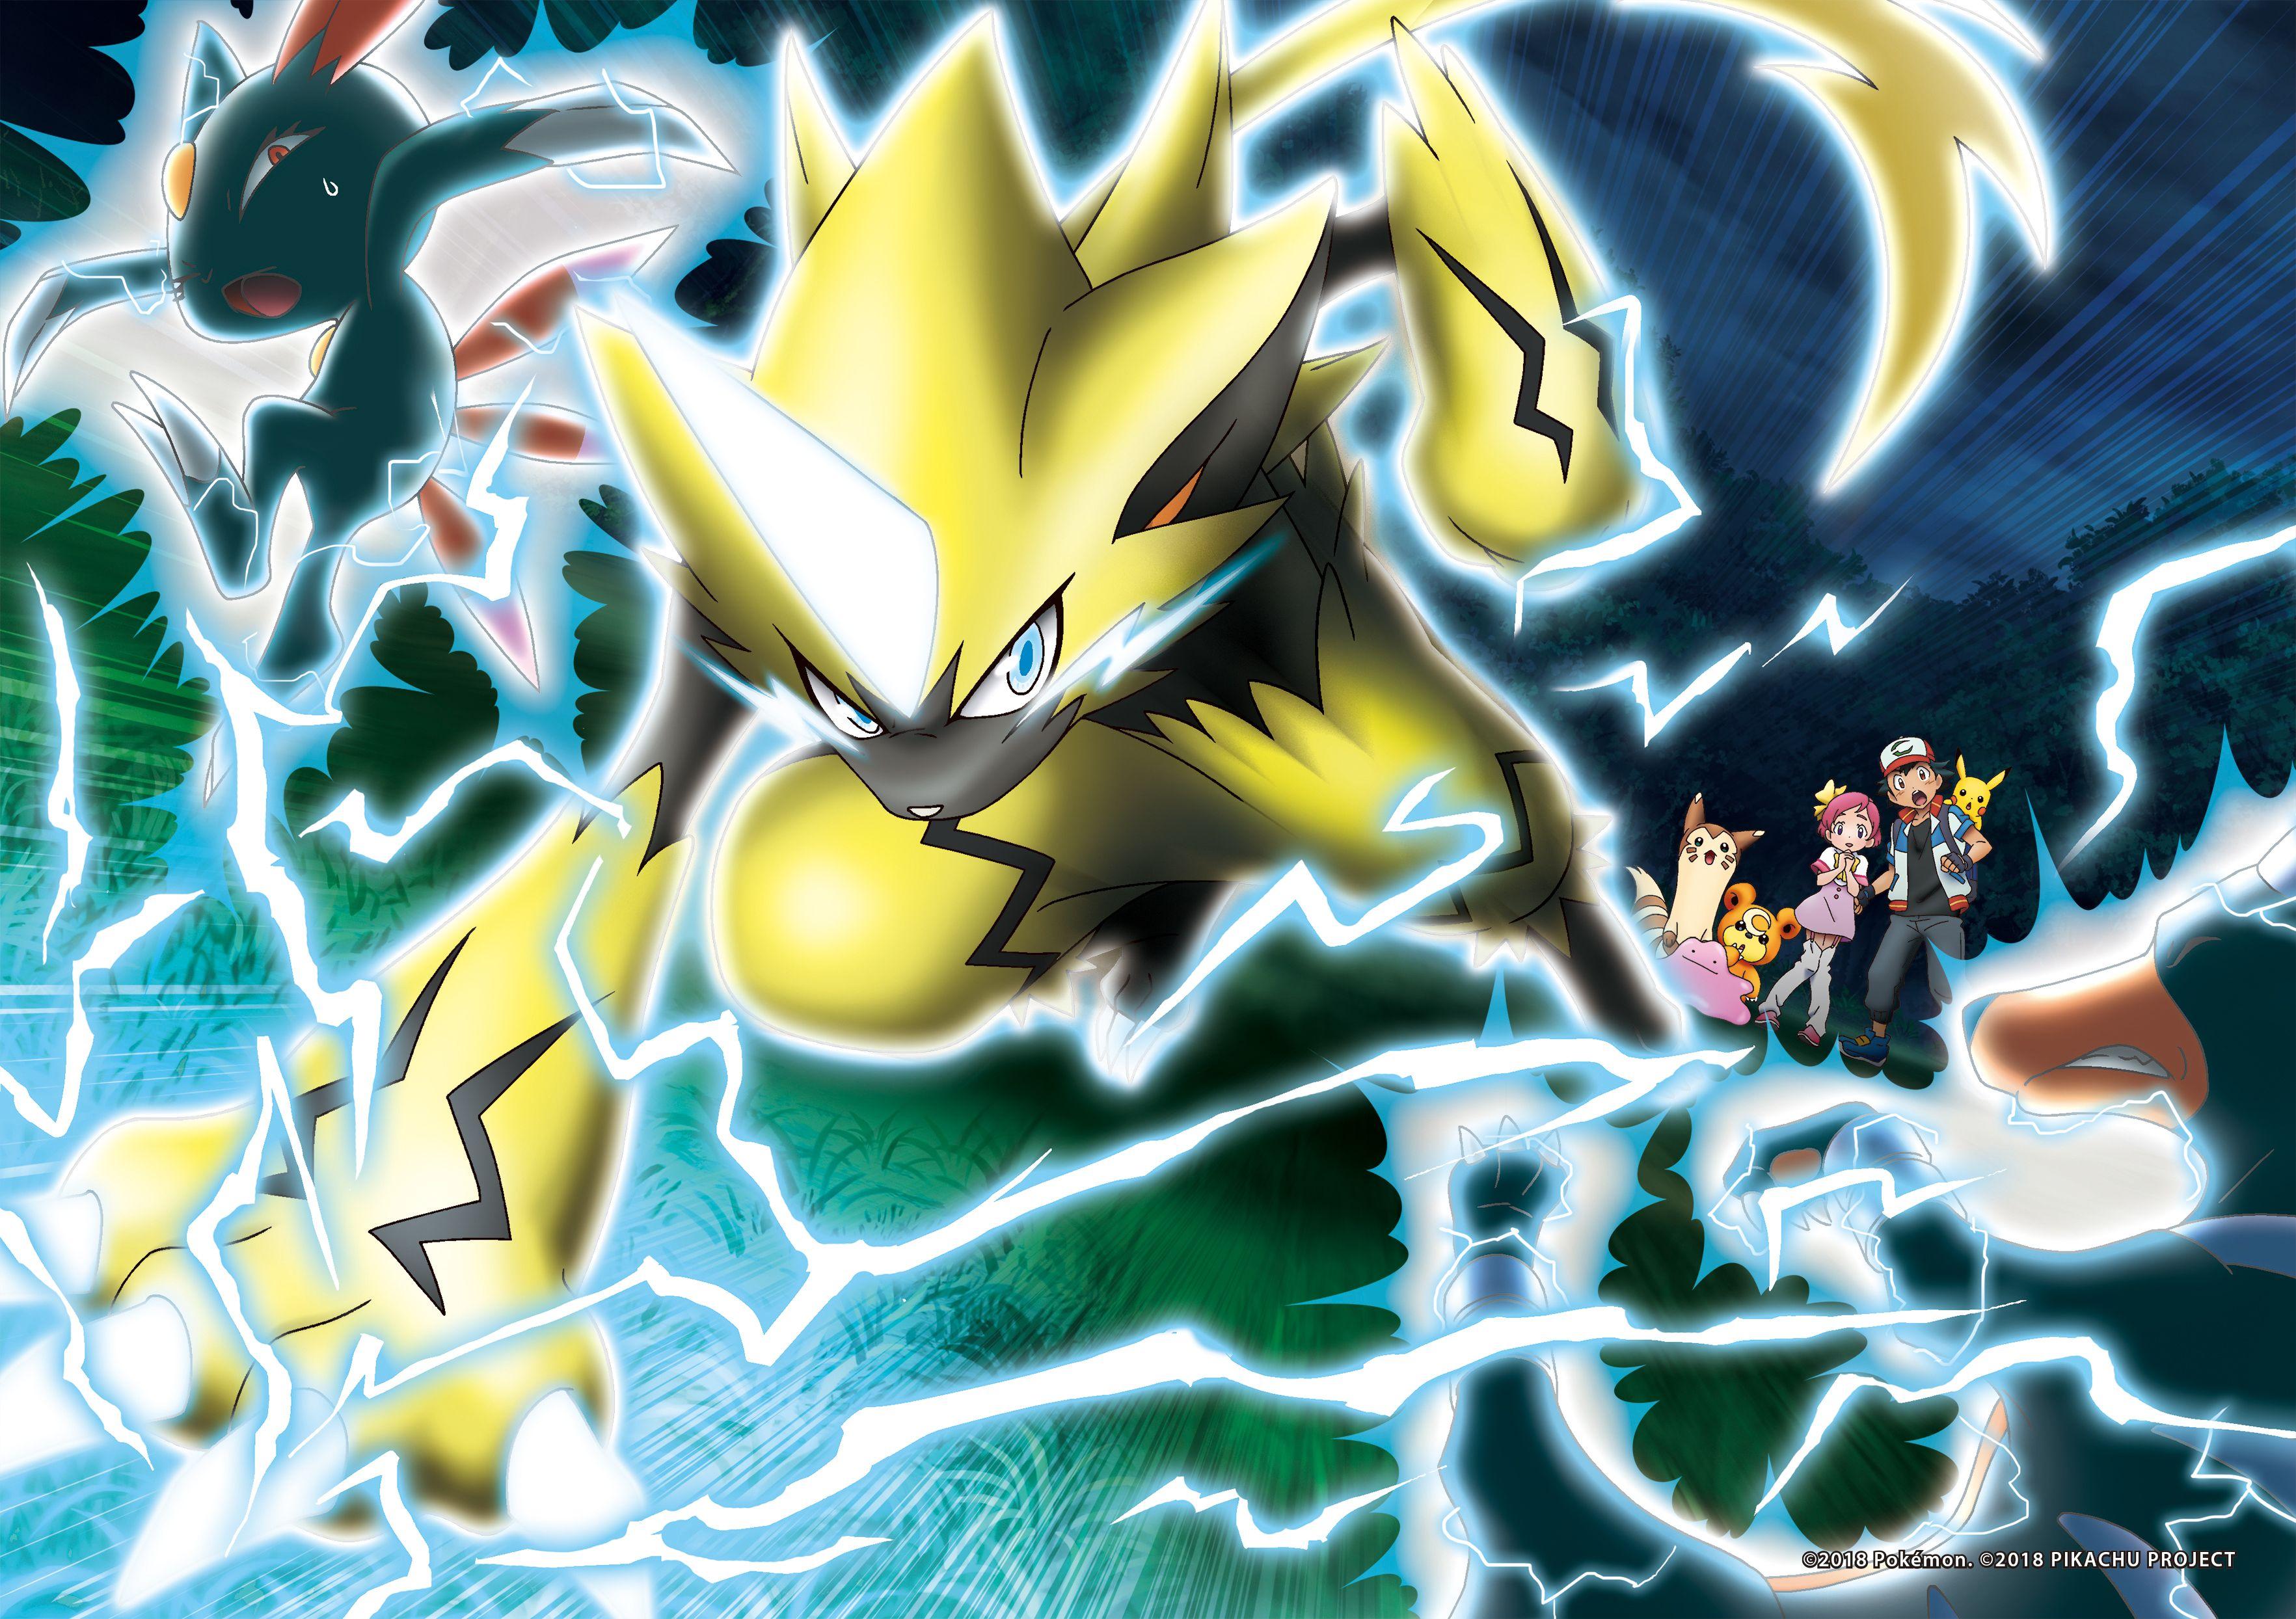 Zeraora (Pokémon) HD Wallpaper and Background Image